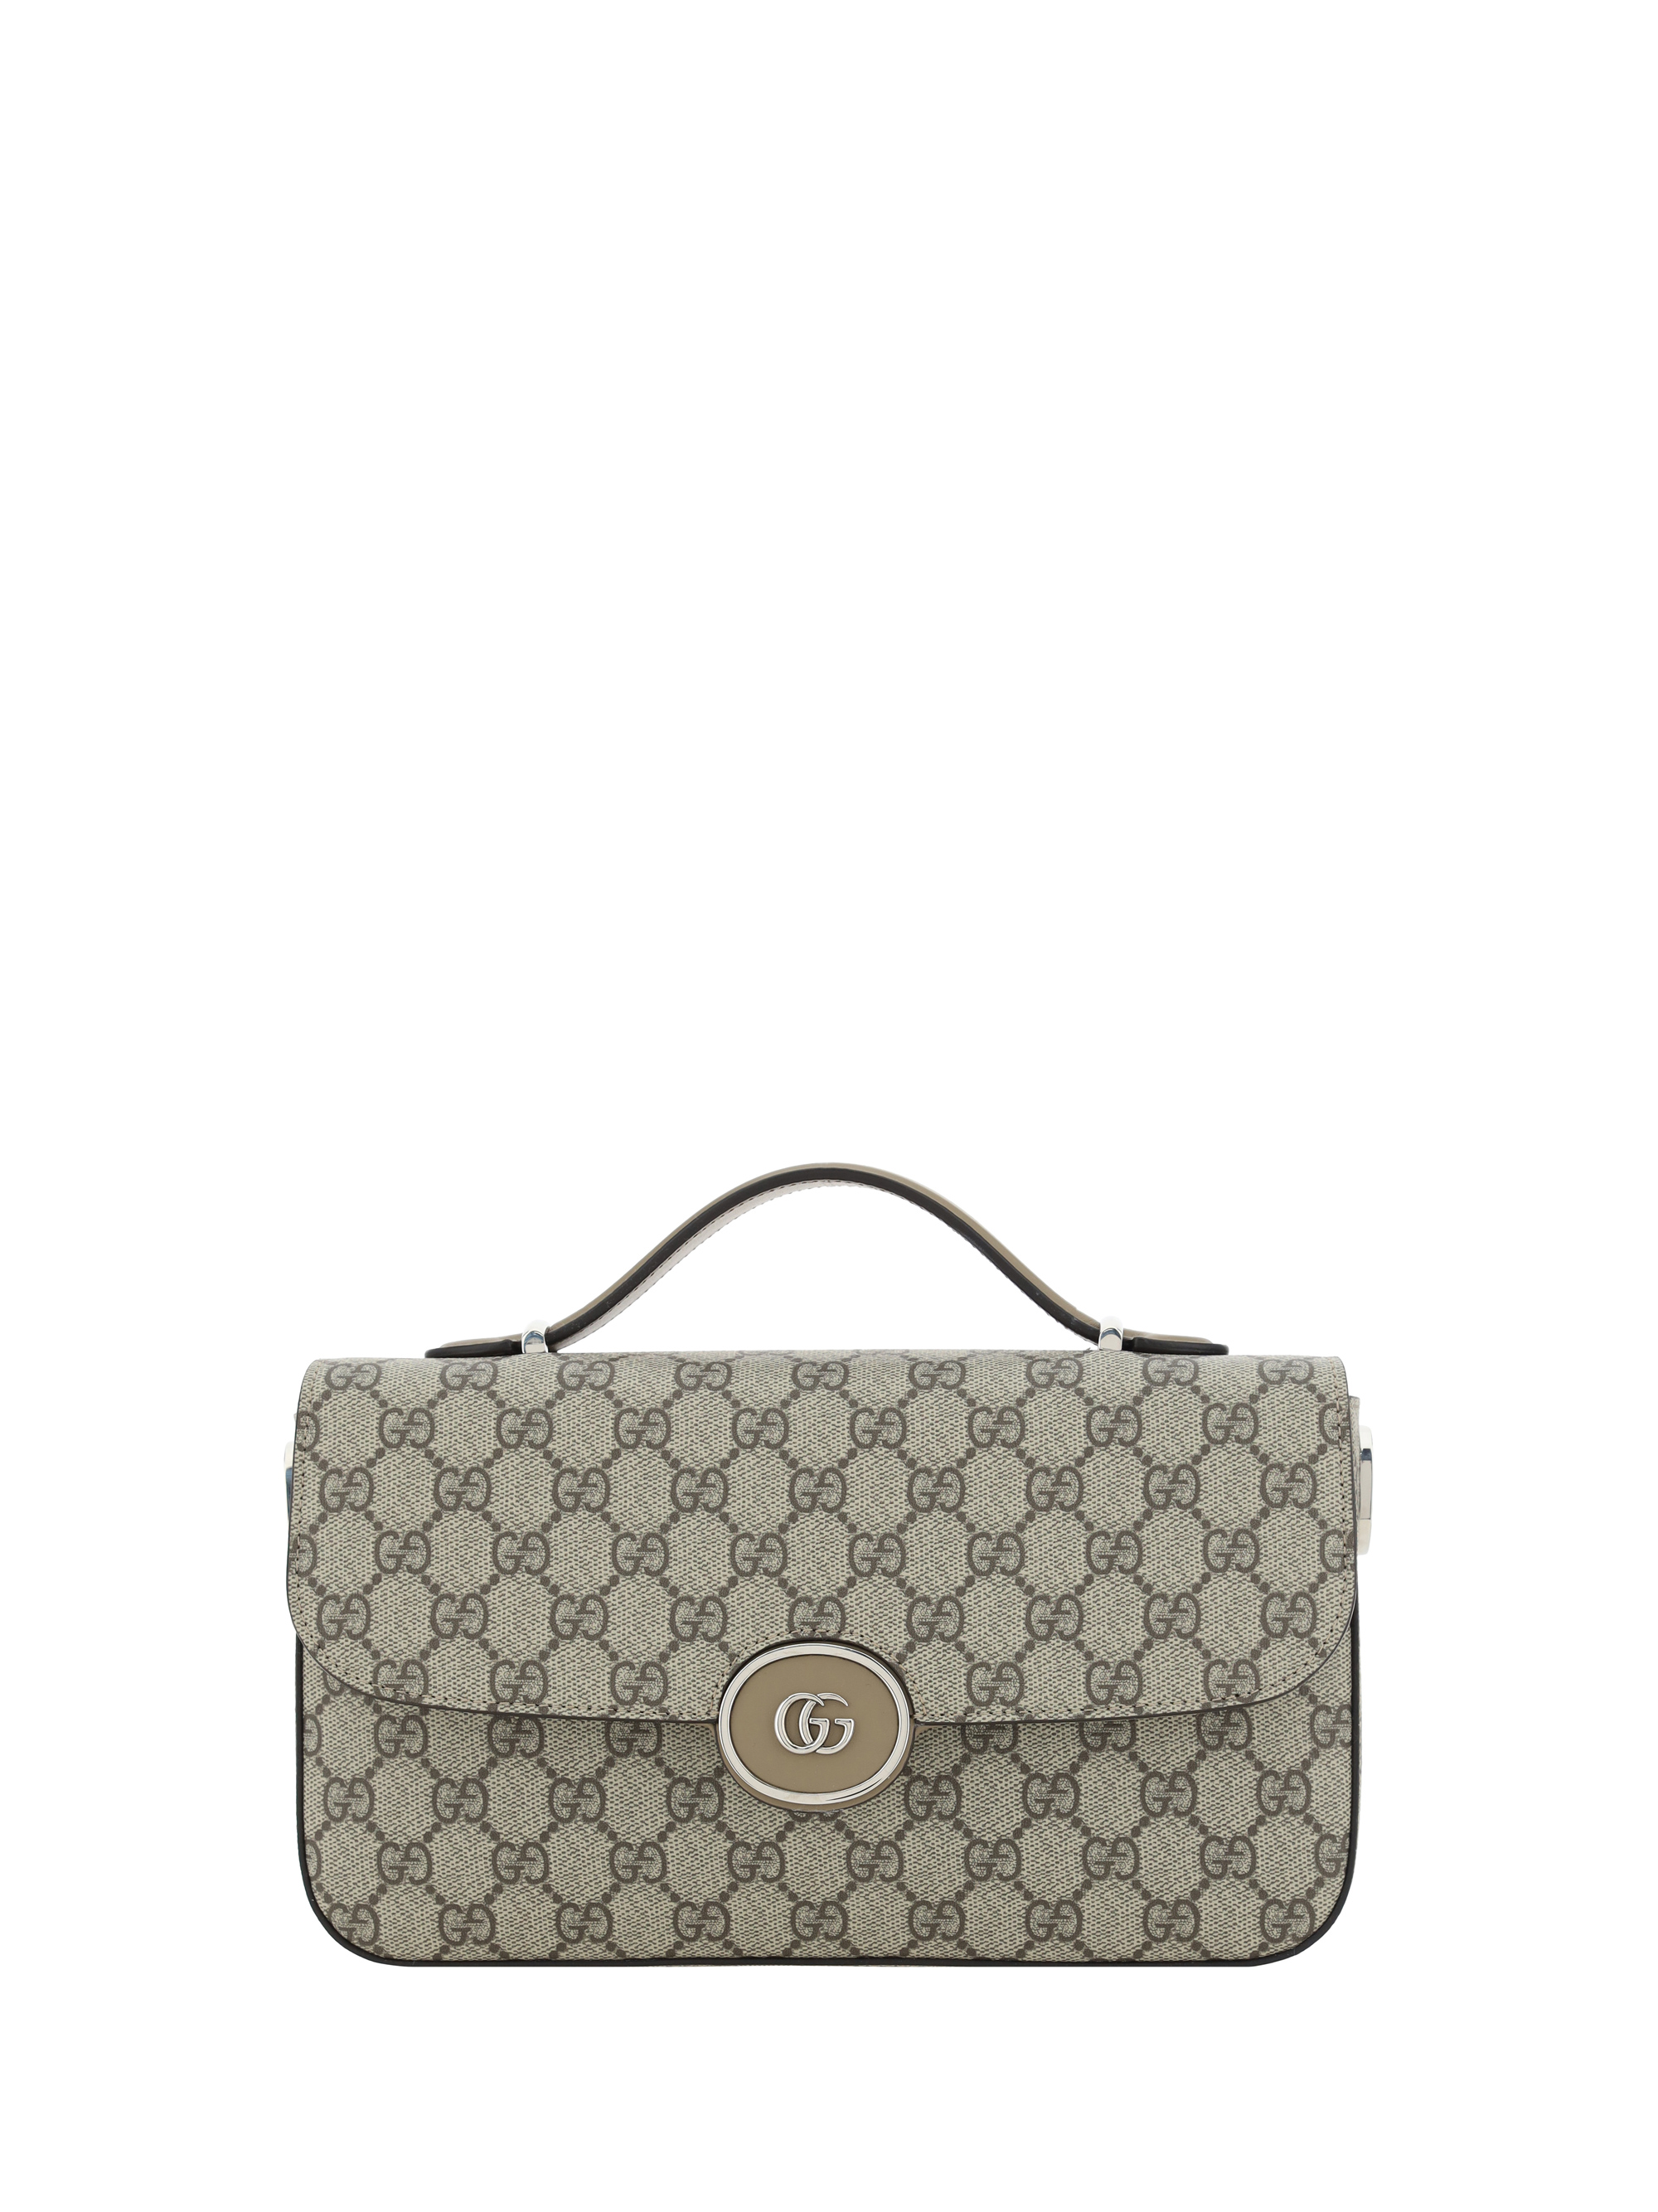 Gucci Interlocking GG Shoulder Bag Mini White in Leather with Gold-tone - GB